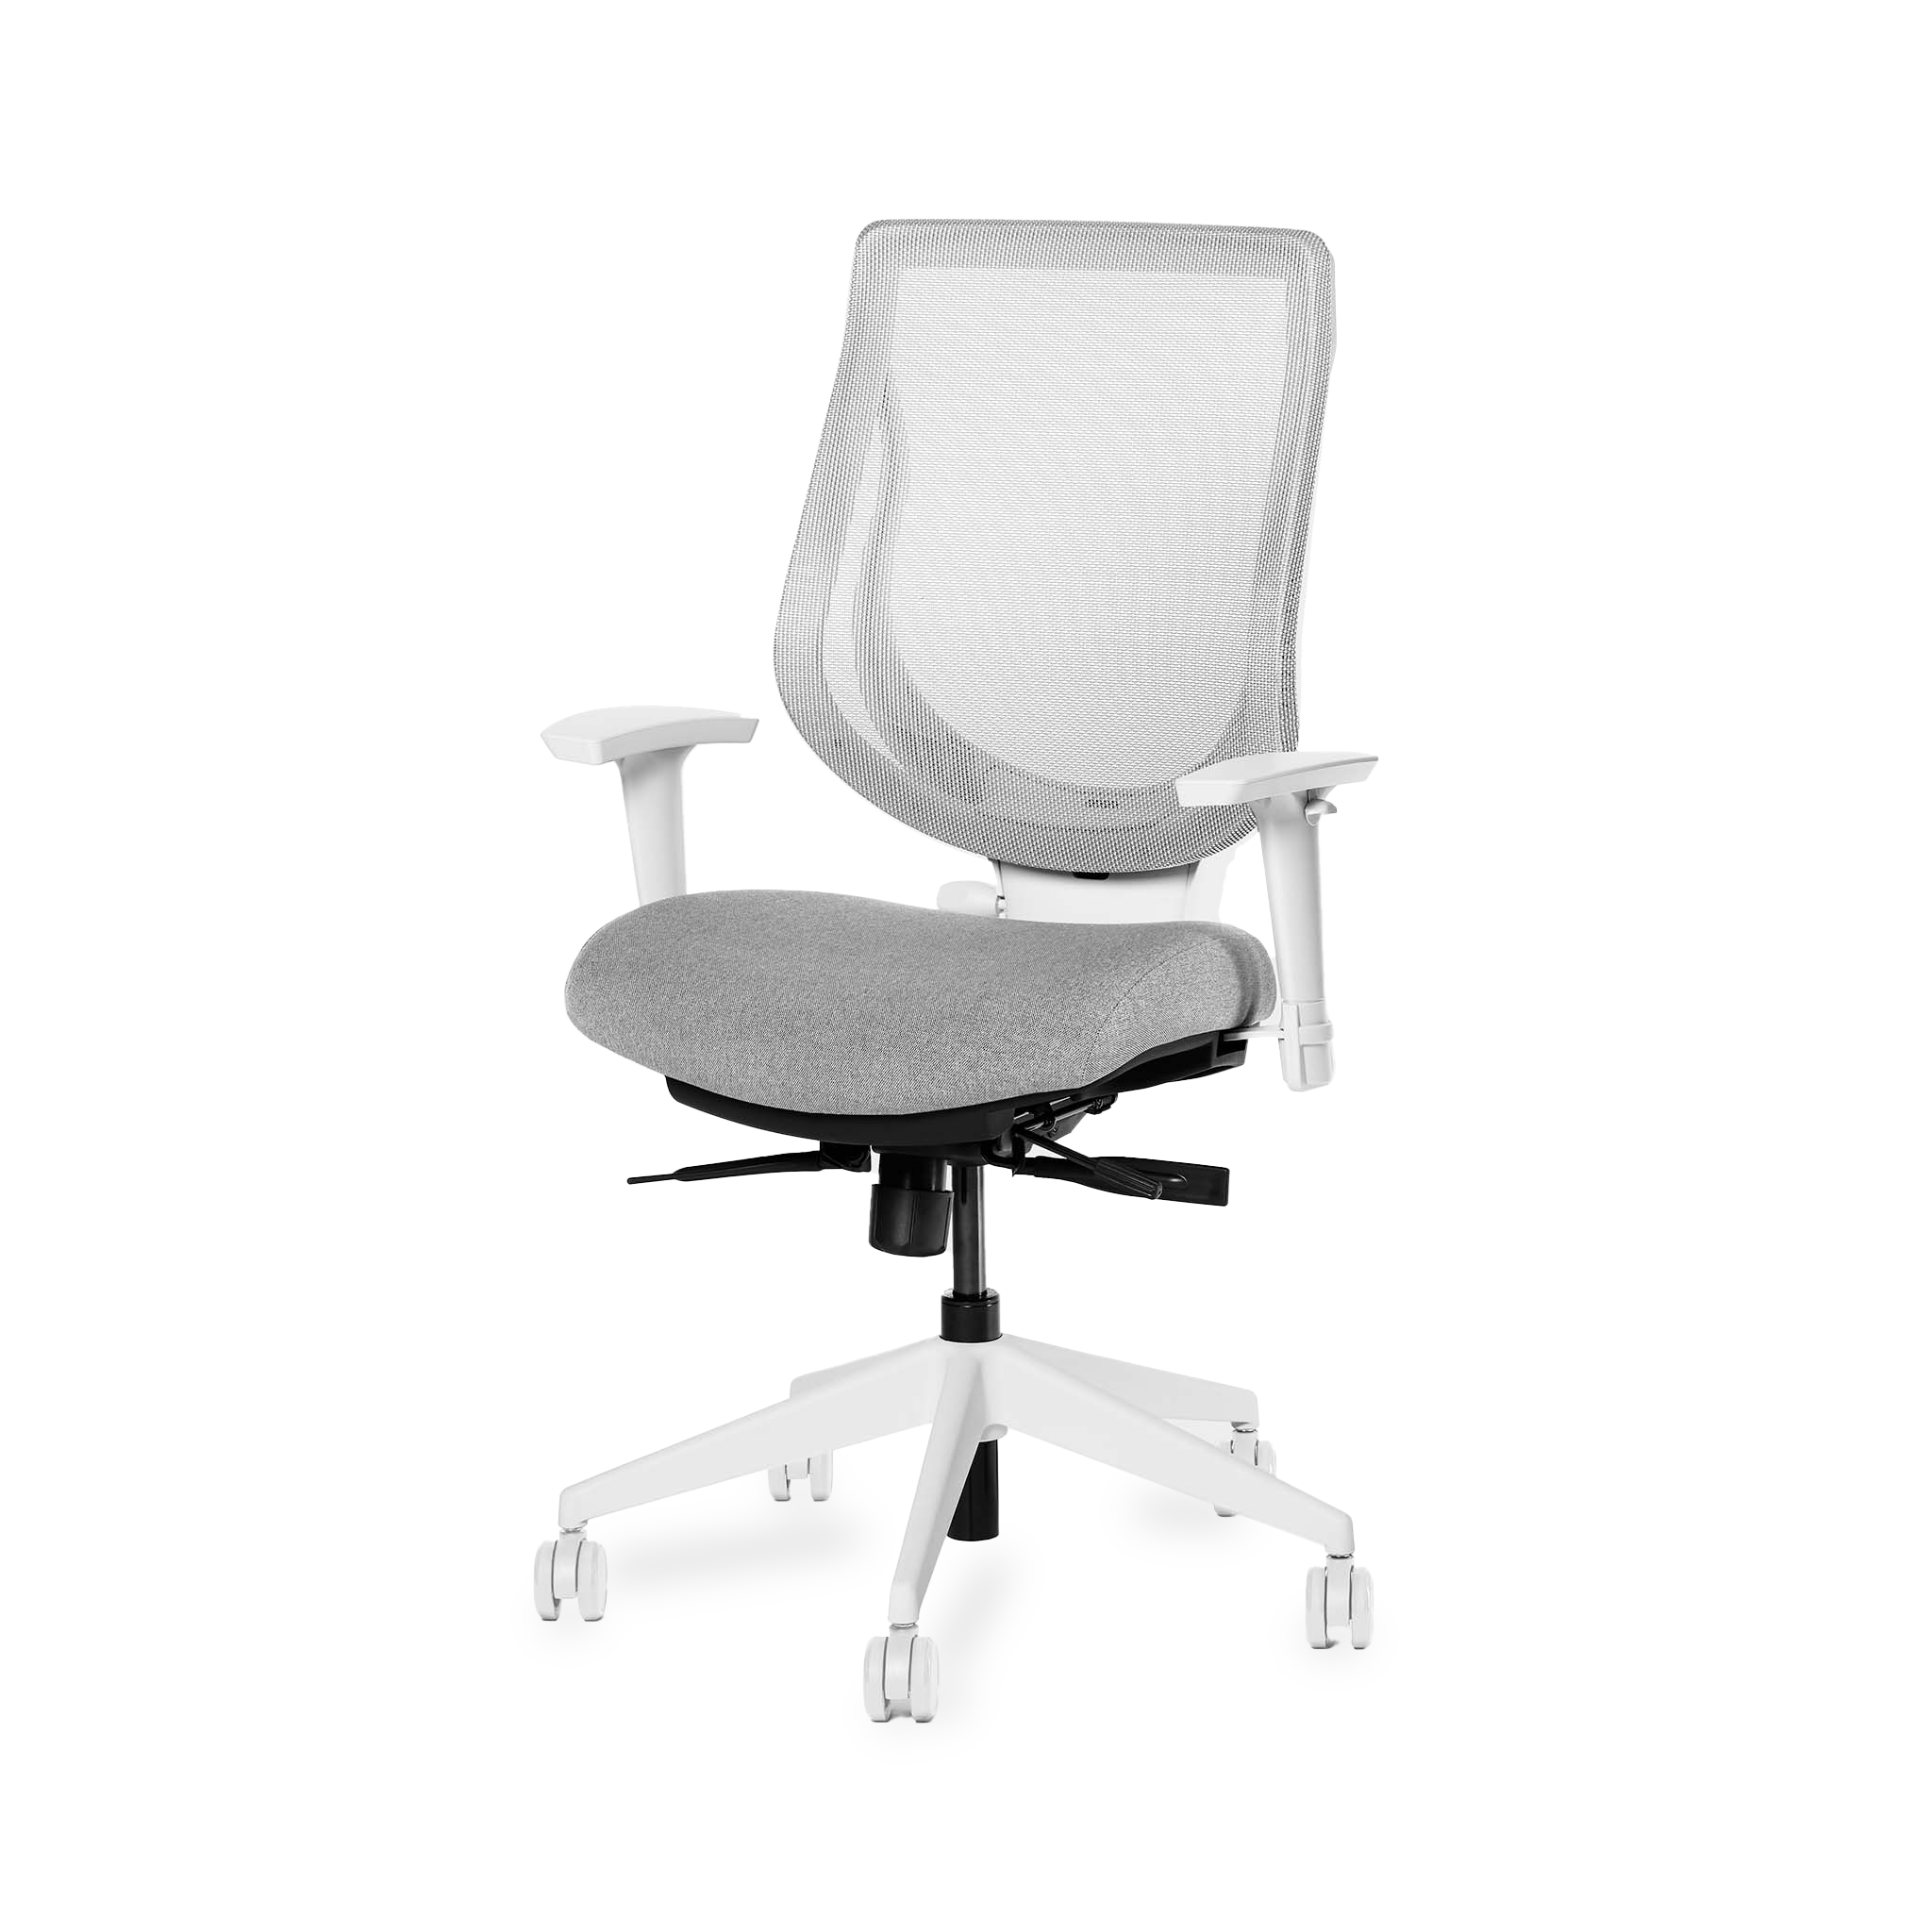 Buy the YouToo Ergonomic Office Chair | ergonofis